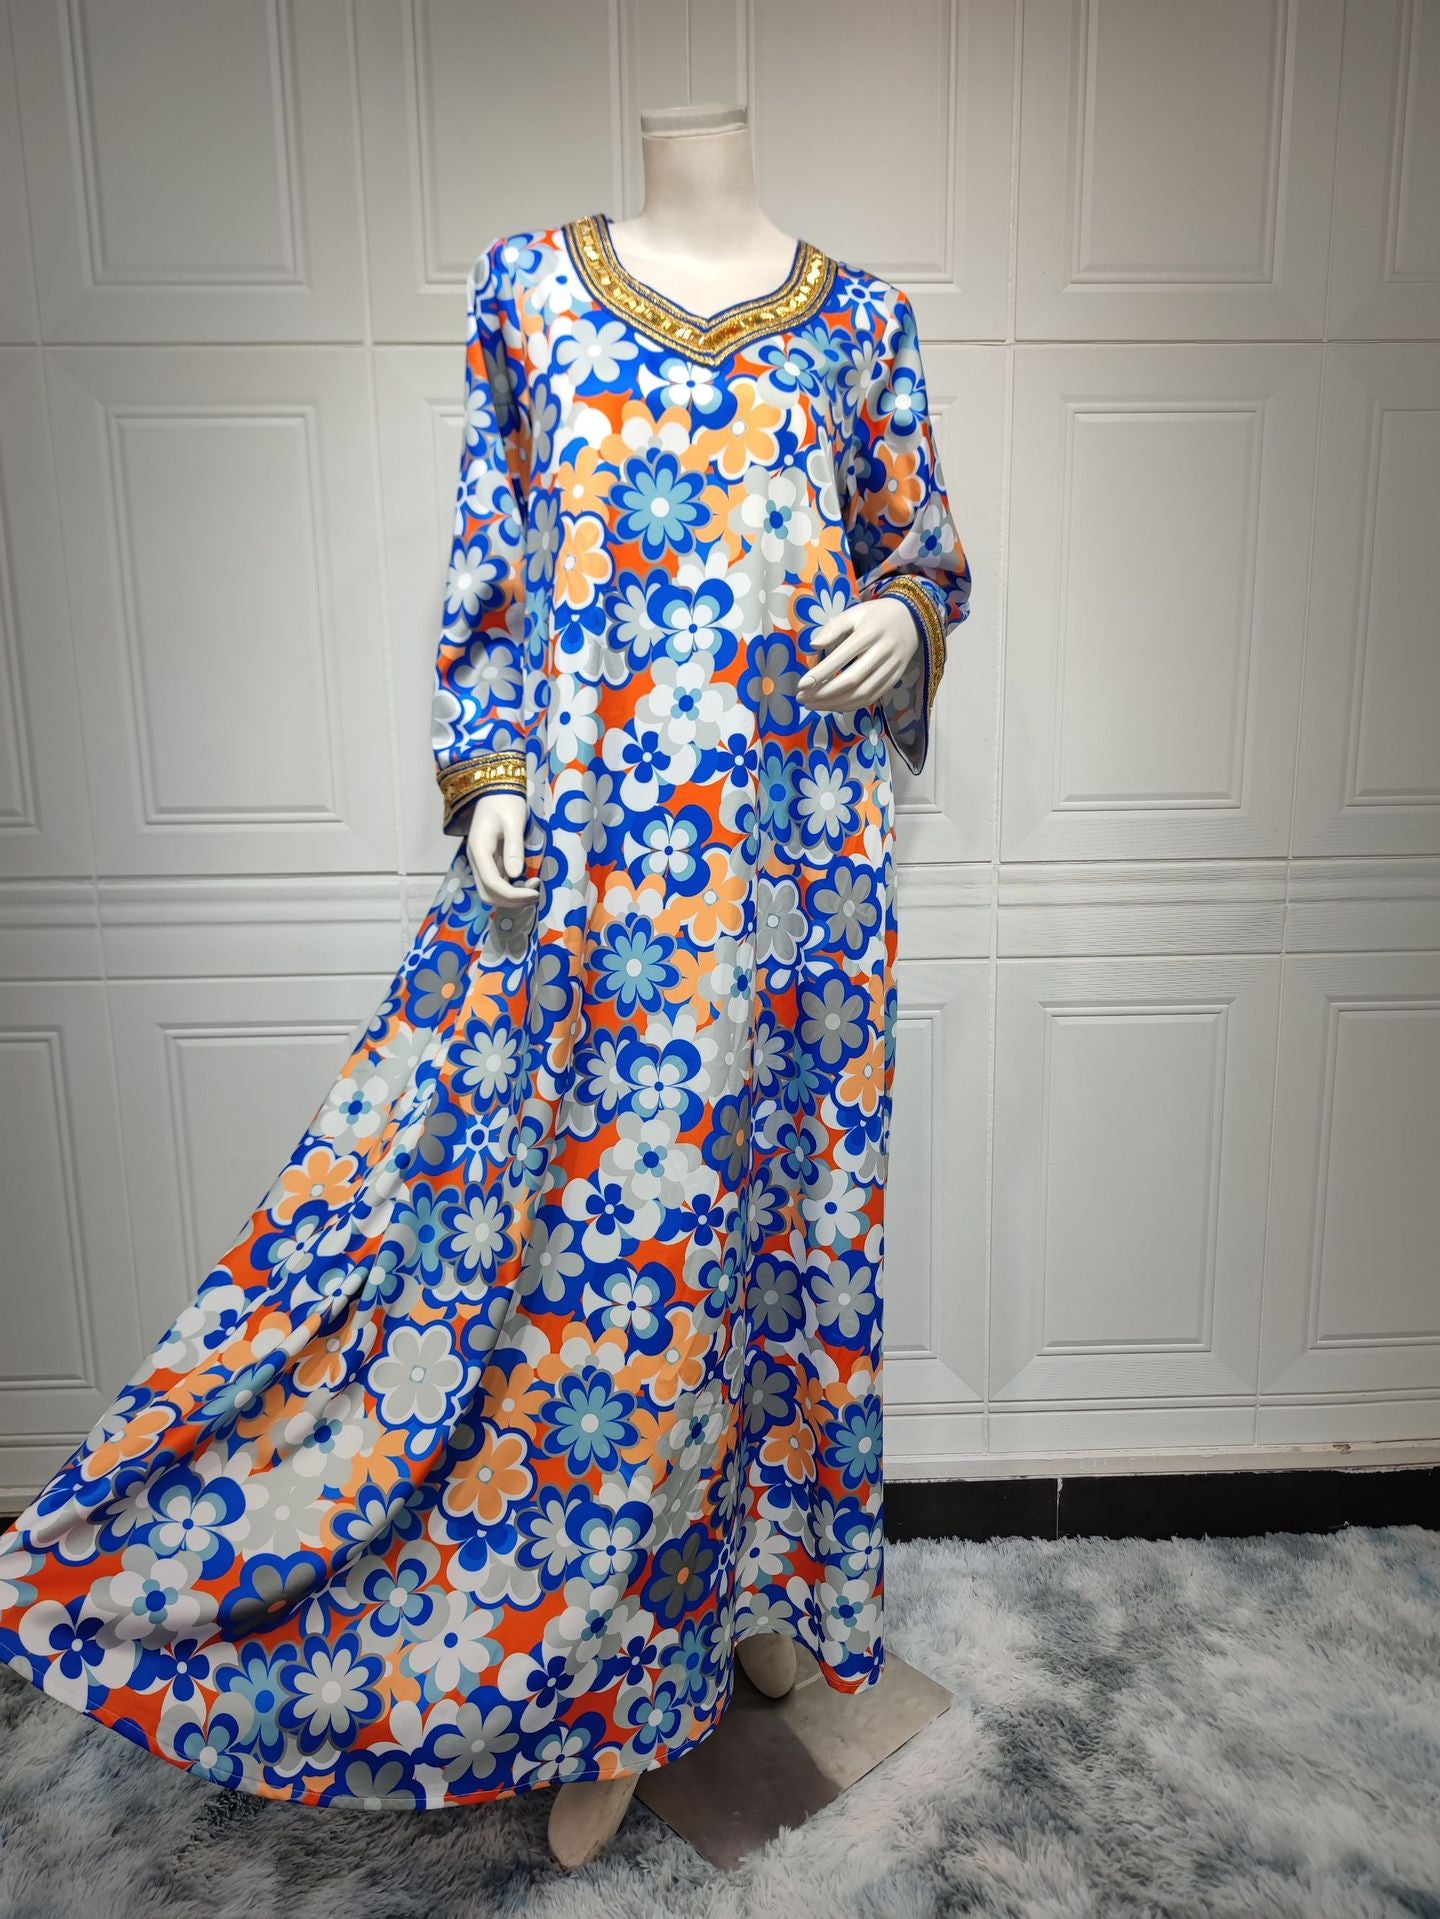 BamBam Muslim loungewear print jalabiya Beaded dubai ladies robe - BamBam